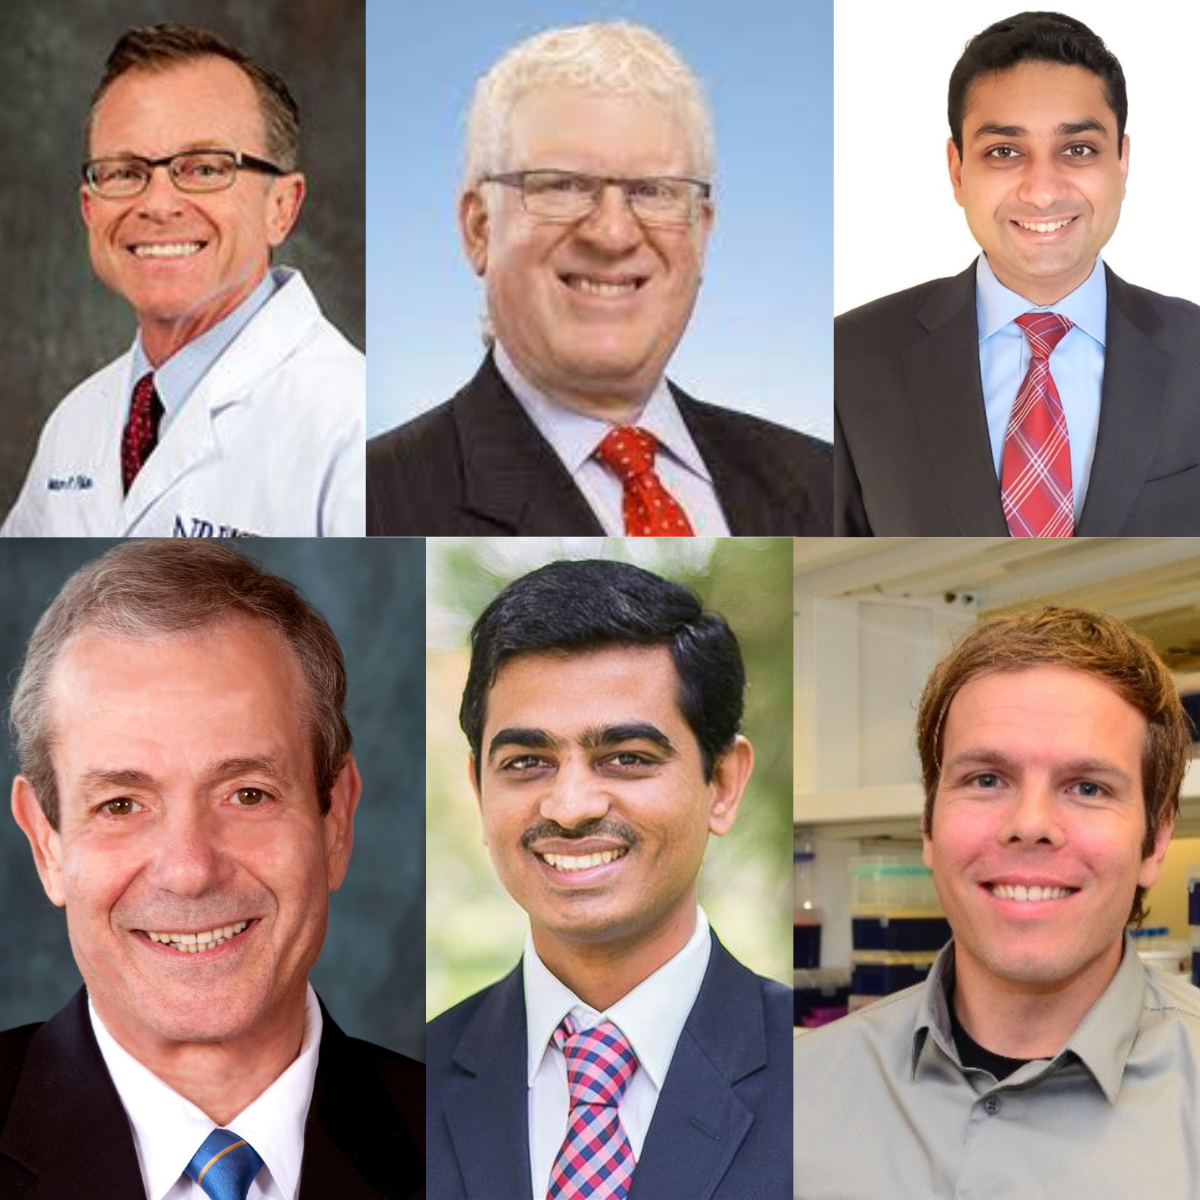 Collage of headshots from Drs. Juan Frias, Bob Gabbay, Rahual Aggarwal, Yehuda Handelsman, Viral Shah, and Ward Fickweiler | Credit: Velocity Clinical Research, LinkedIn, LinkedIn, Endocrine Society, Colorado University, and LinkedIn